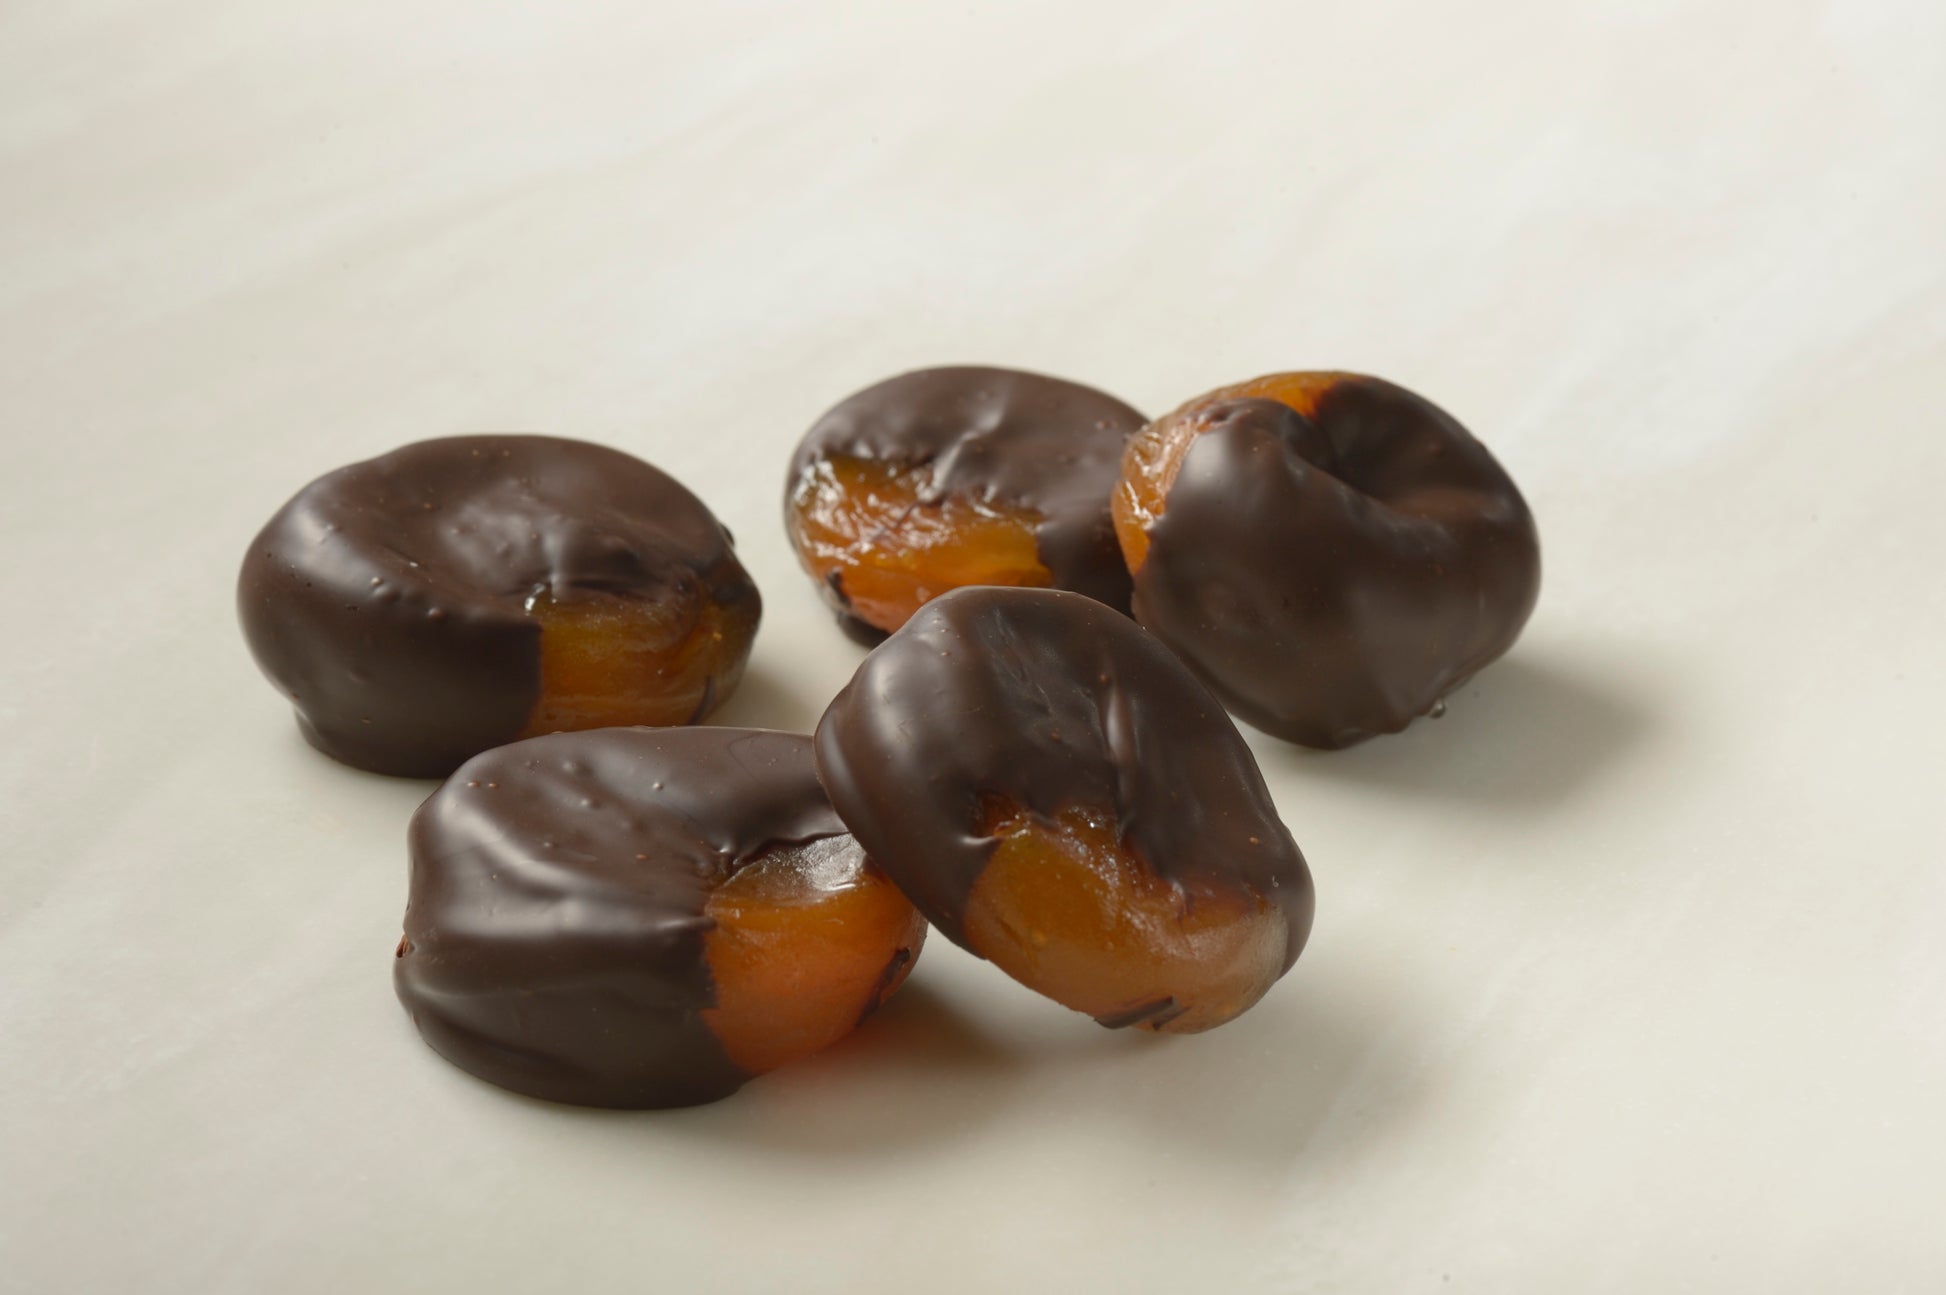 Dark Chocolate Glazed Apricots - succulent Australian apricots hand-dipped in rich dark chocolate by skilled chocolatiers